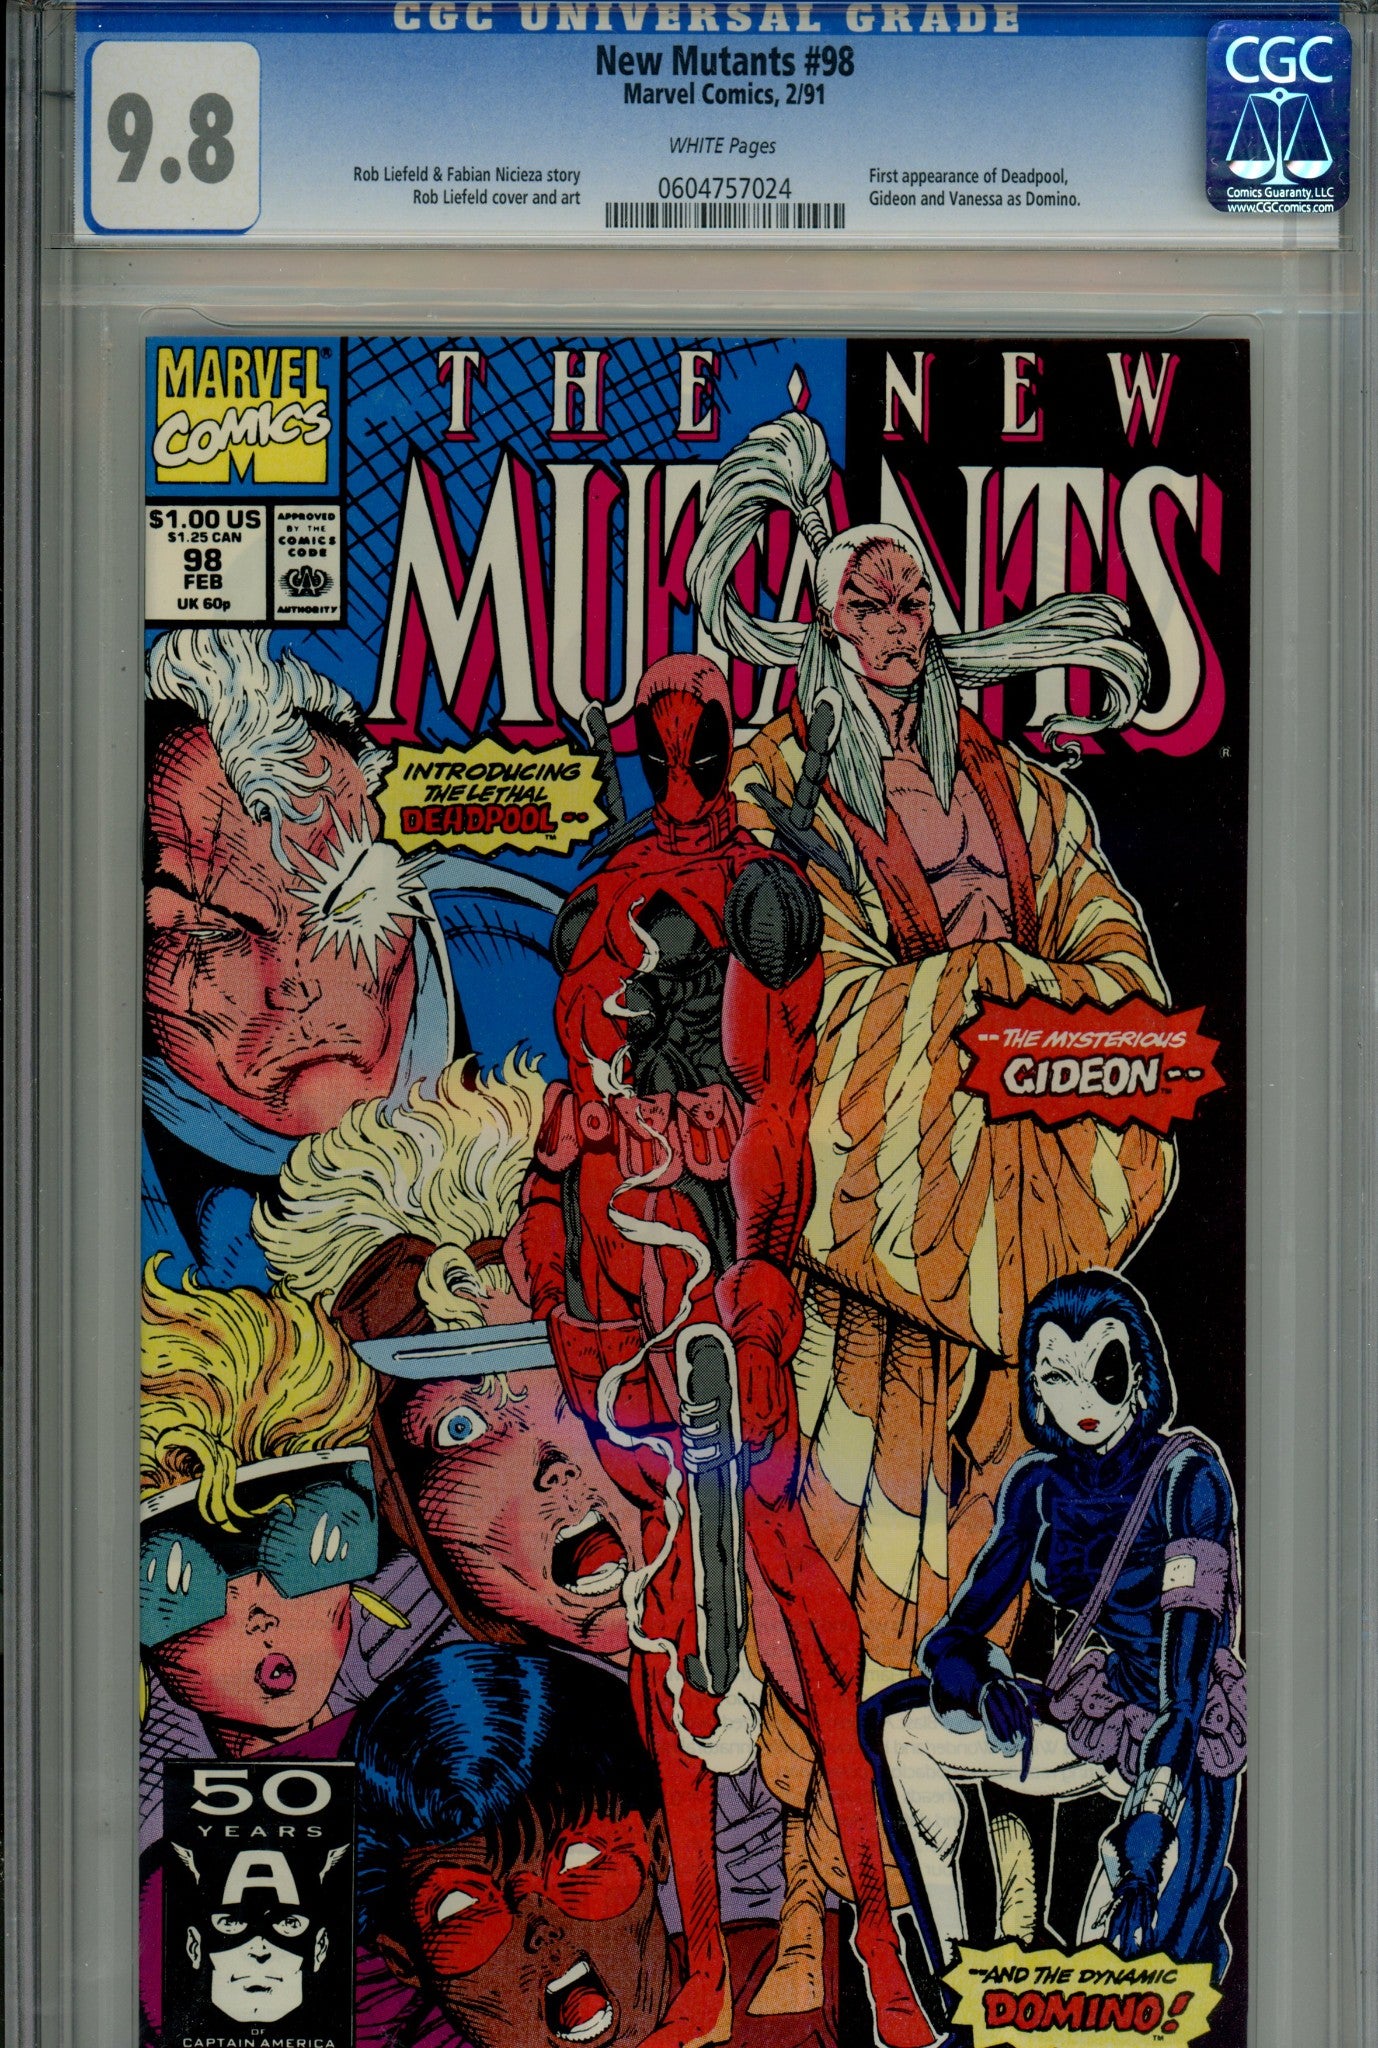 The New Mutants Vol 1 98 CGC 9.8 (NM/M) (1991) 